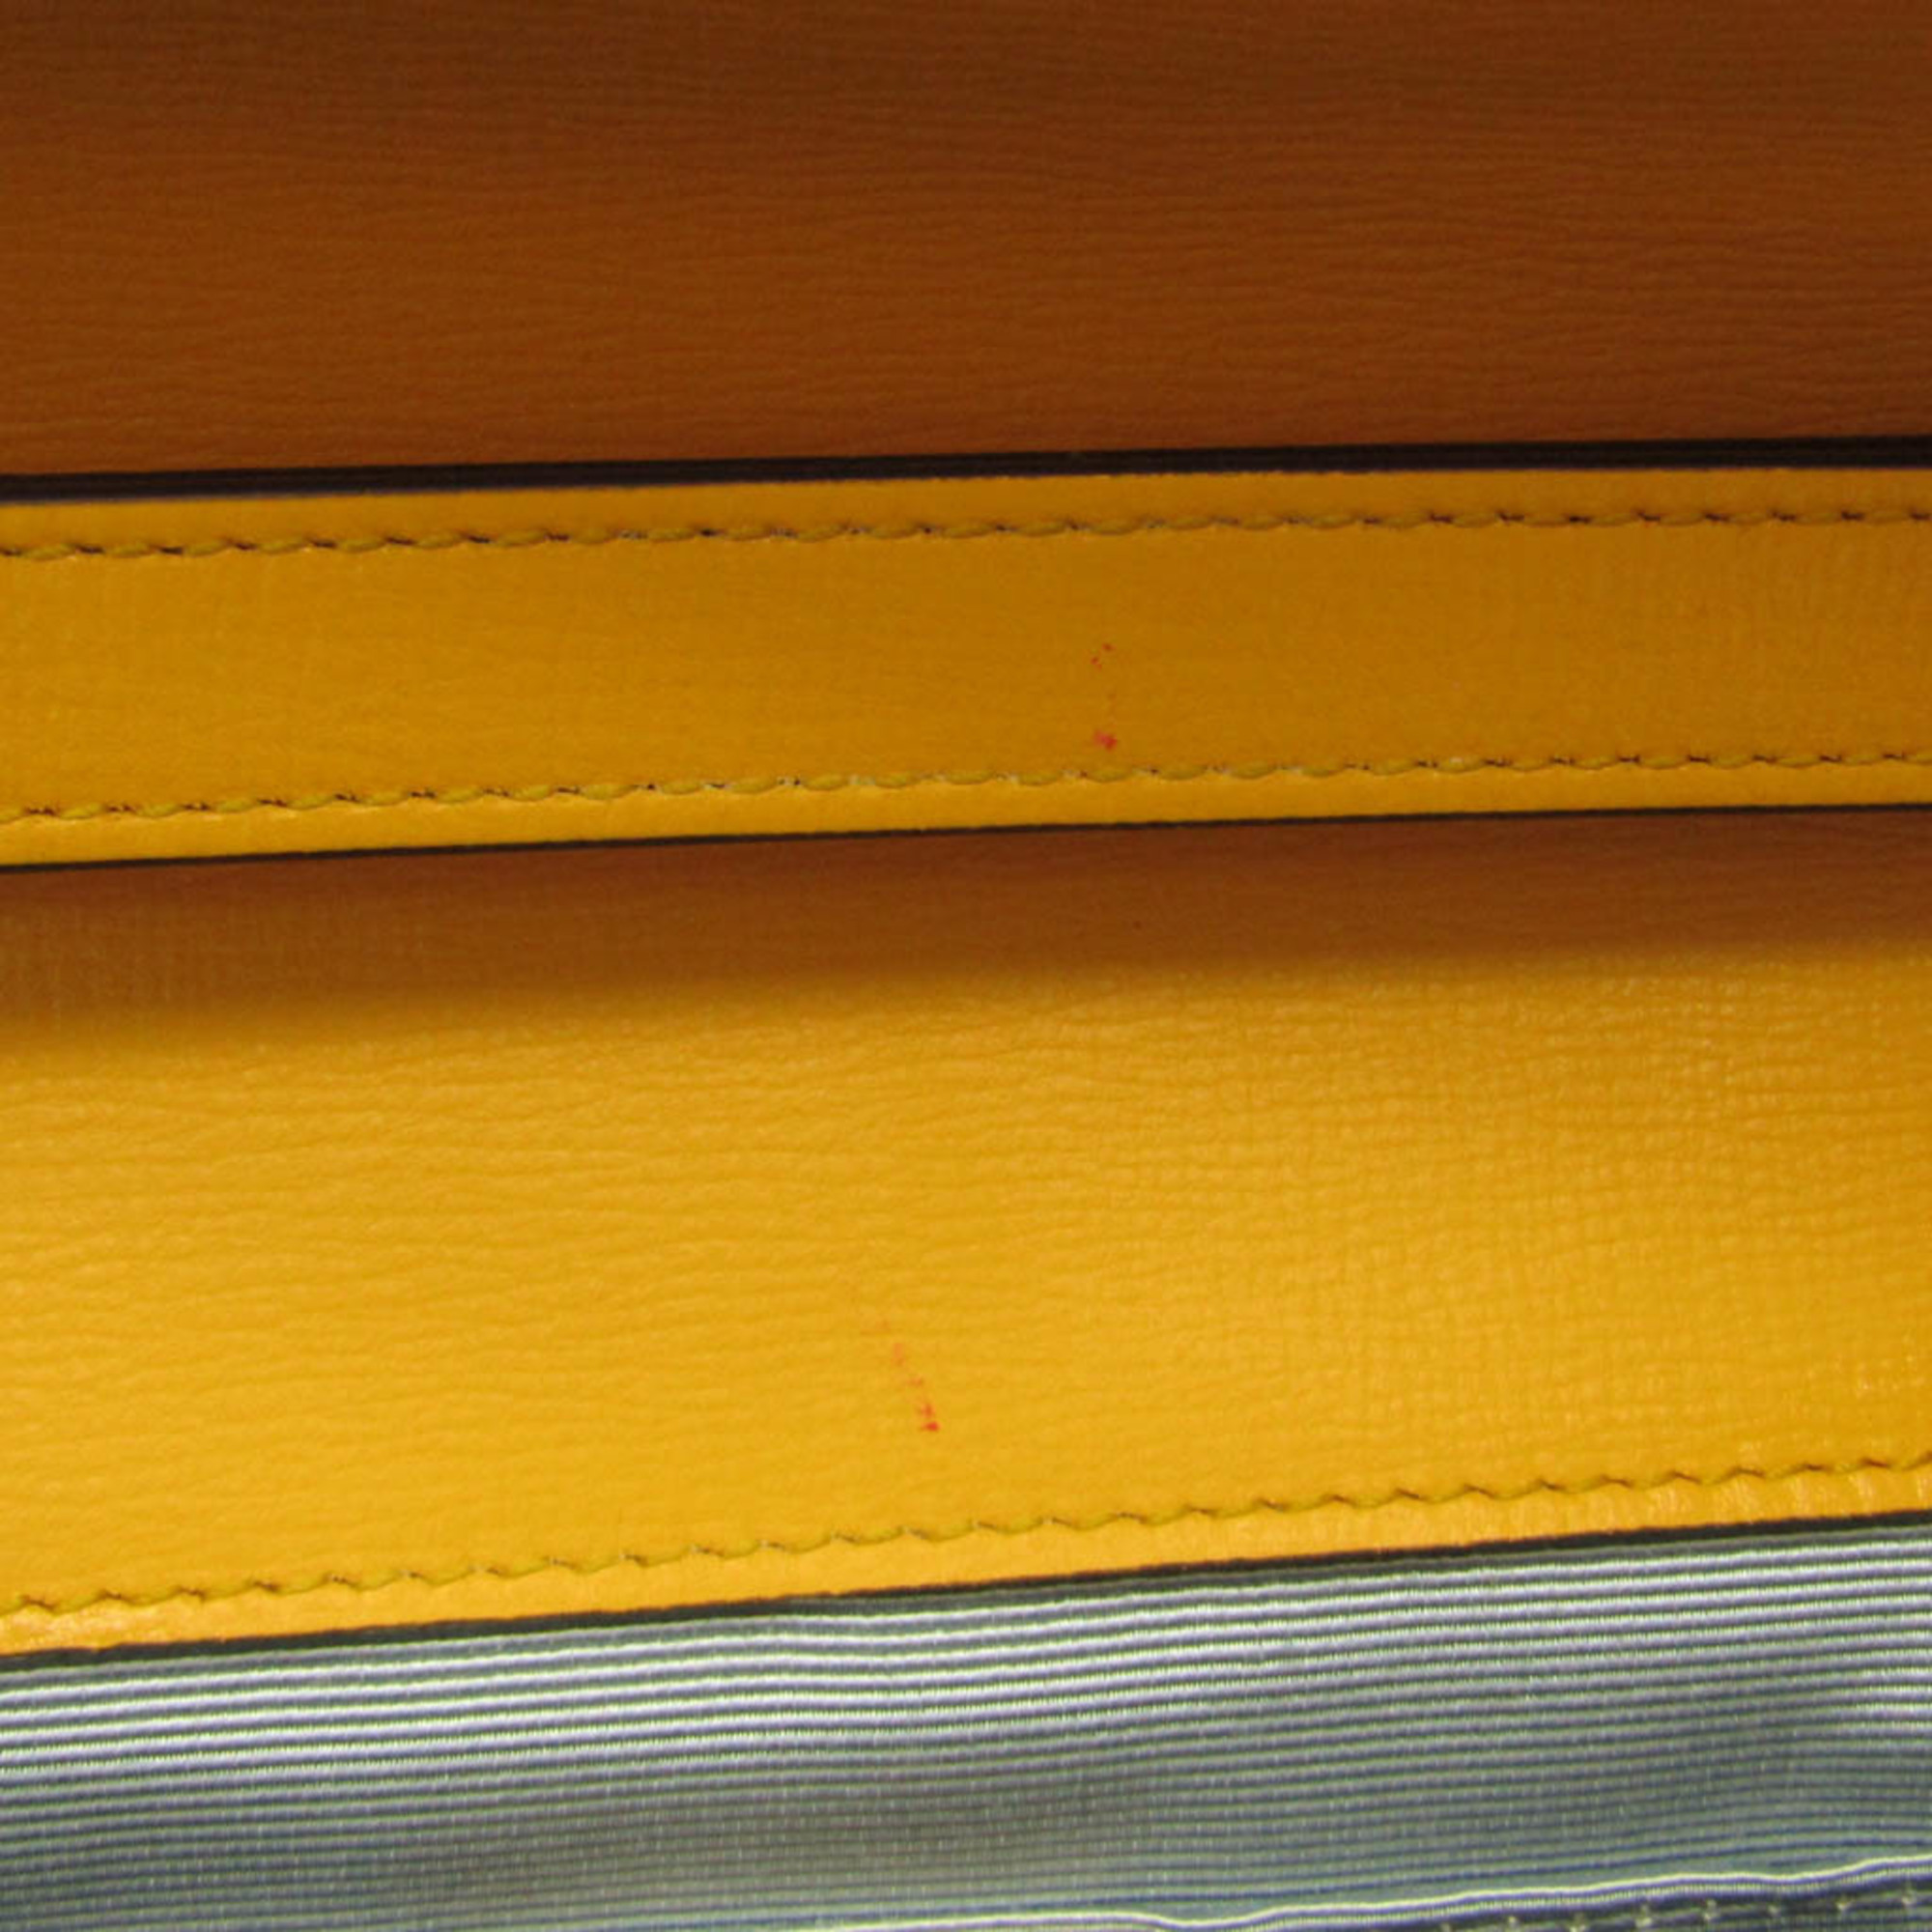 Gucci Horsebit 655667 Women's Straw,Leather Shoulder Bag Yellow